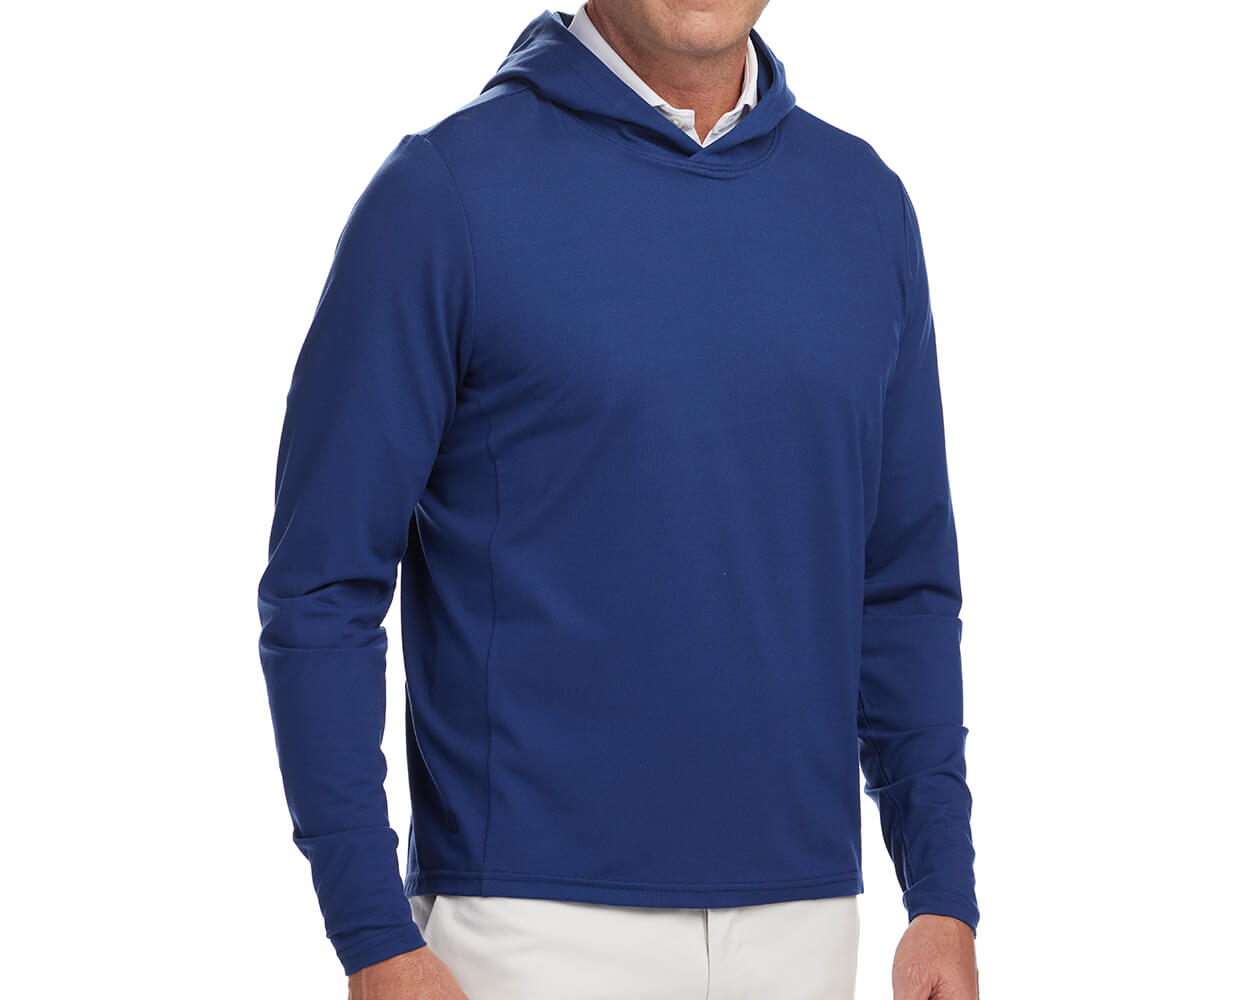 Front shot of Holderness and Bourne navy blue hoodies modeled on man's torso. 